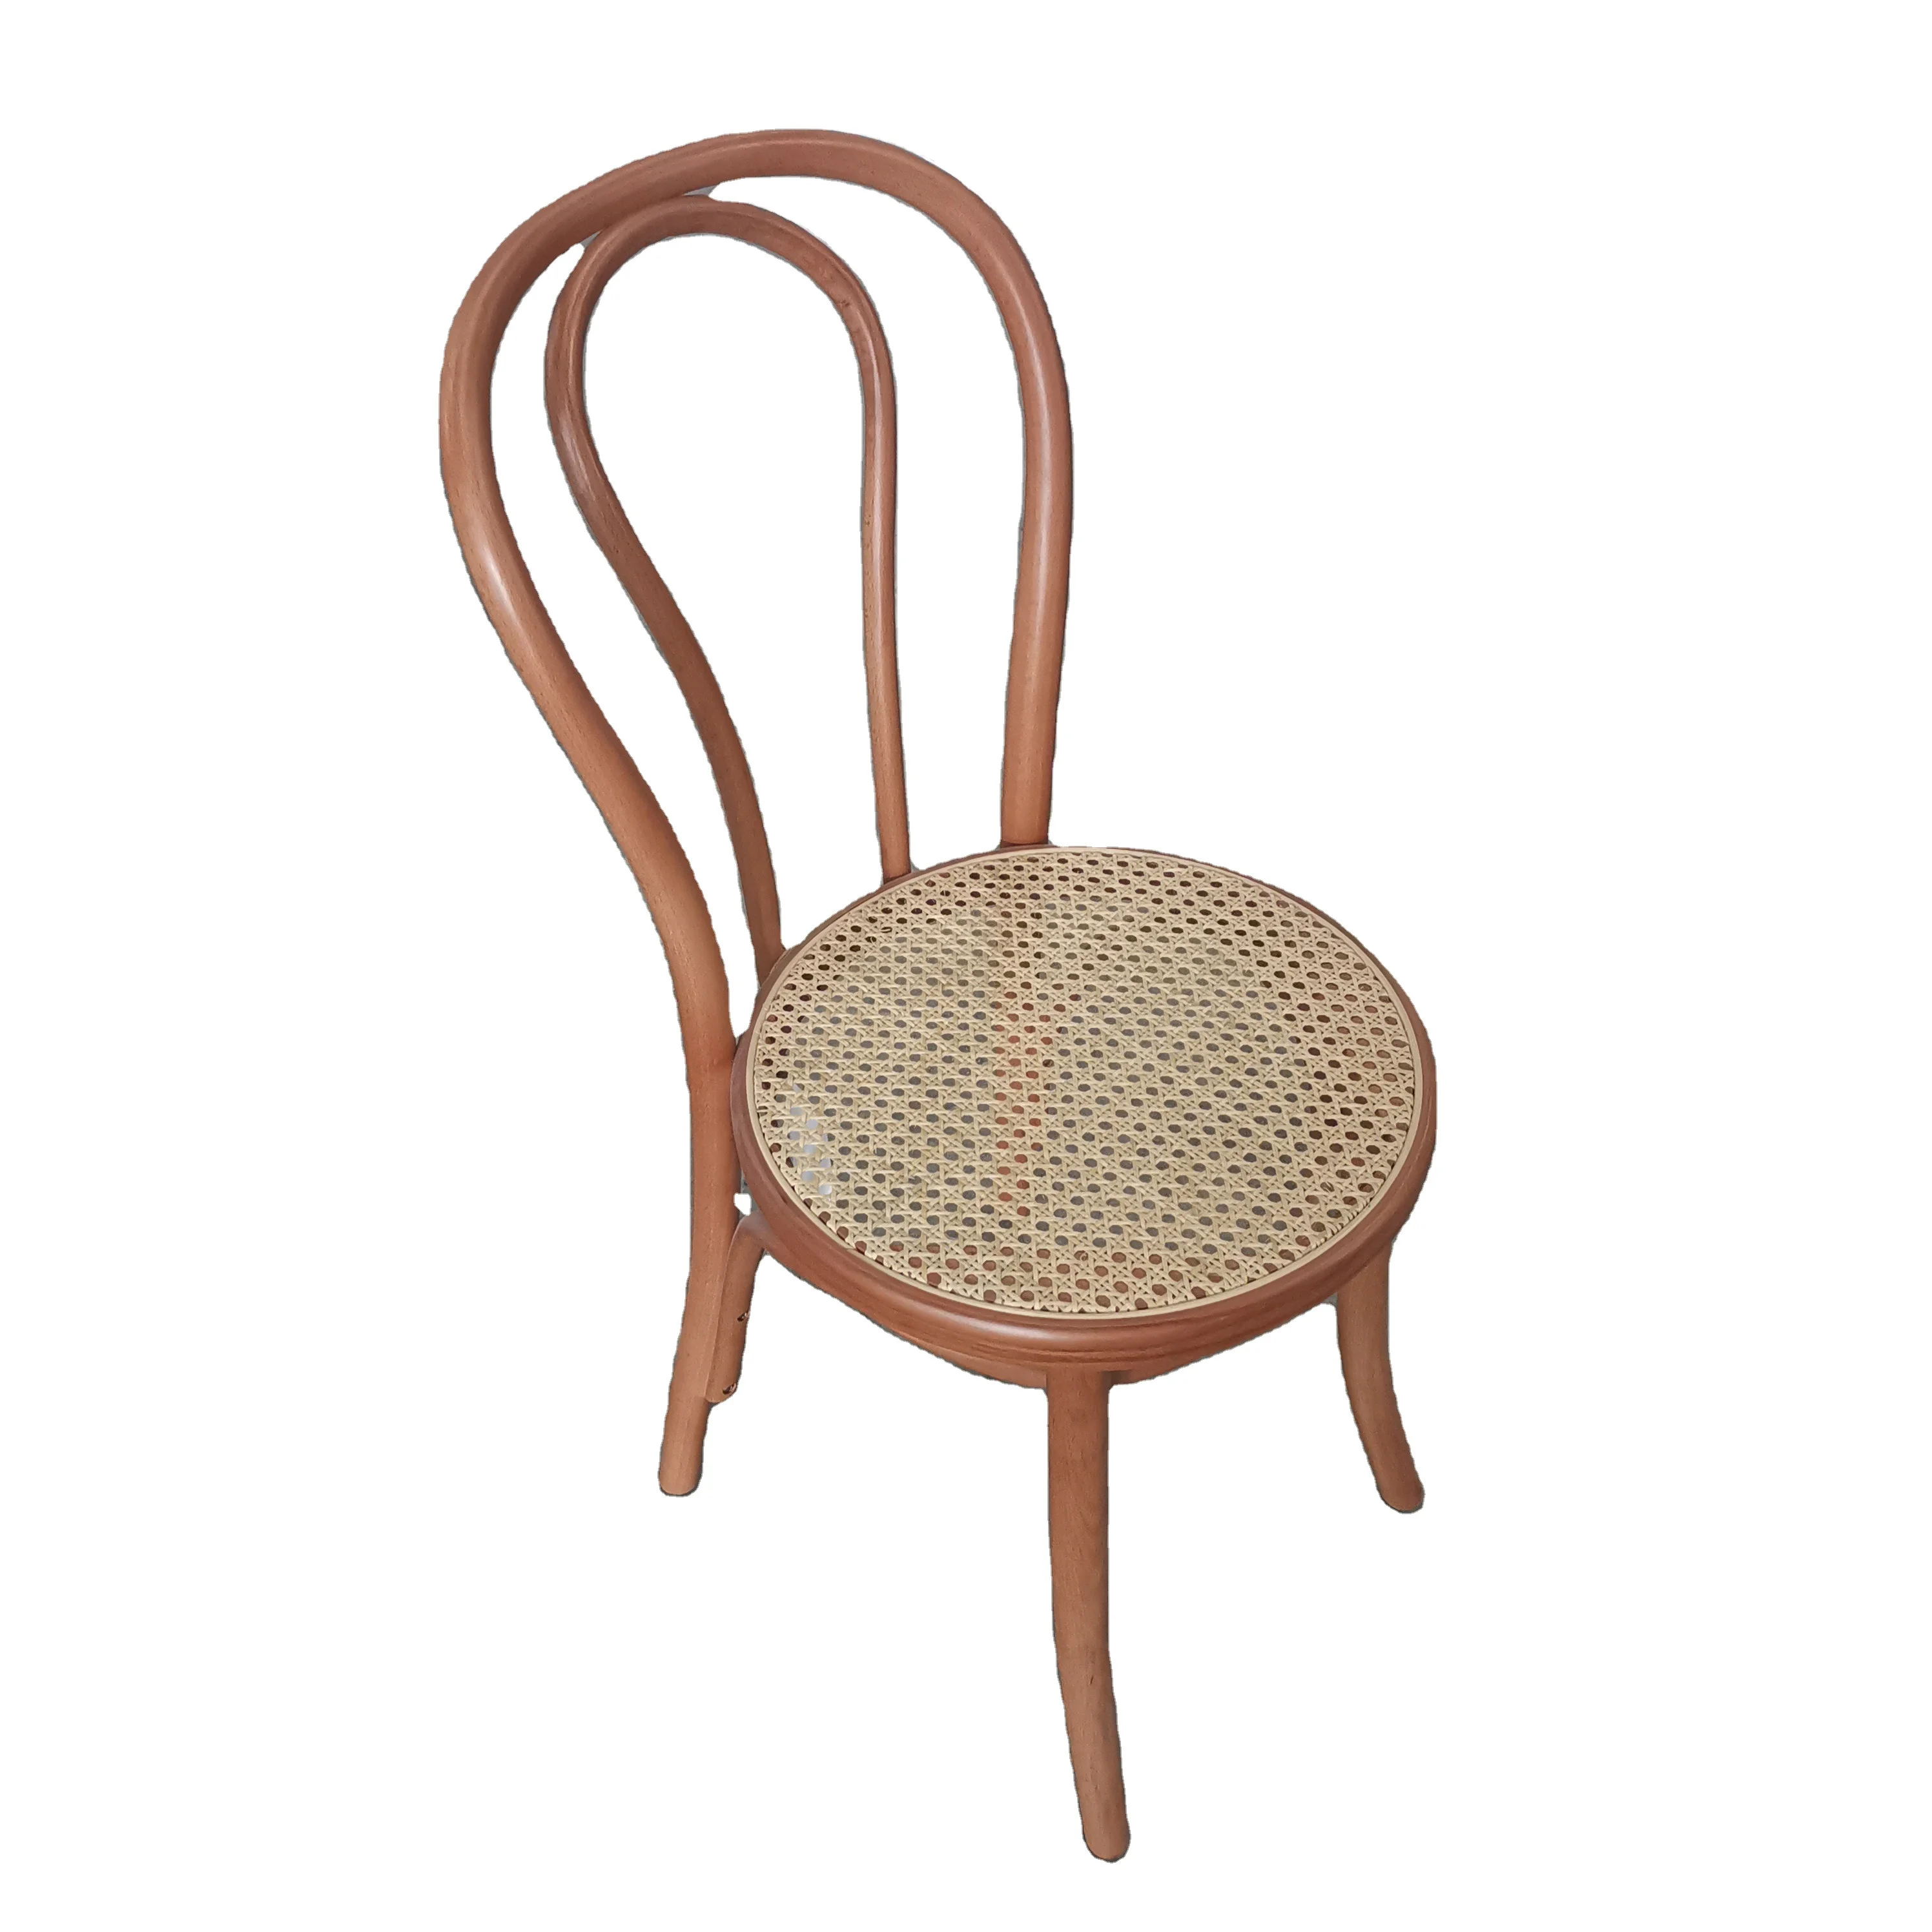 replica thonet sweetheart stoel buy bentwood stoel thonet stoel hout barkruk ontwerp product on alibaba com